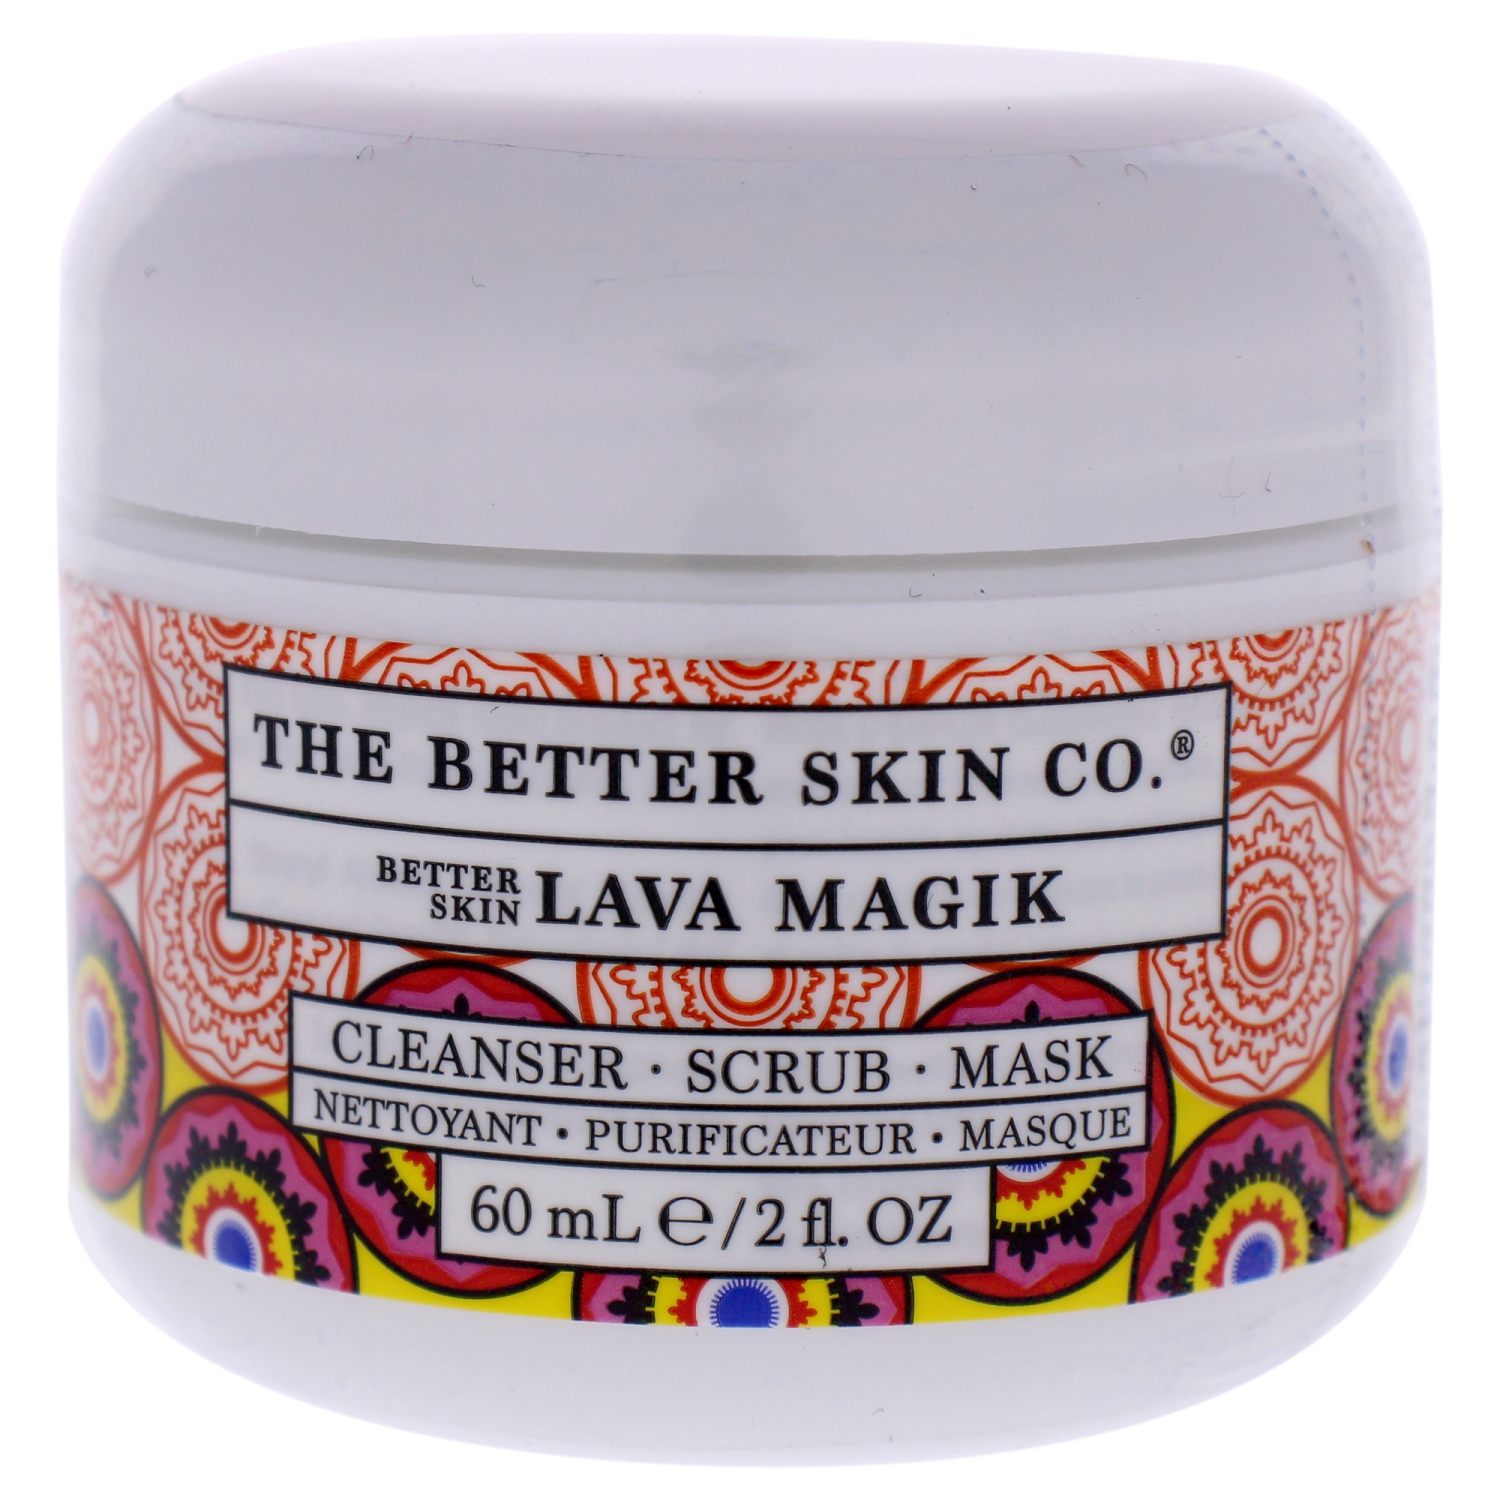 Lava Magik 3 in 1 by The Better Skin for Women - 2 oz Cleanser